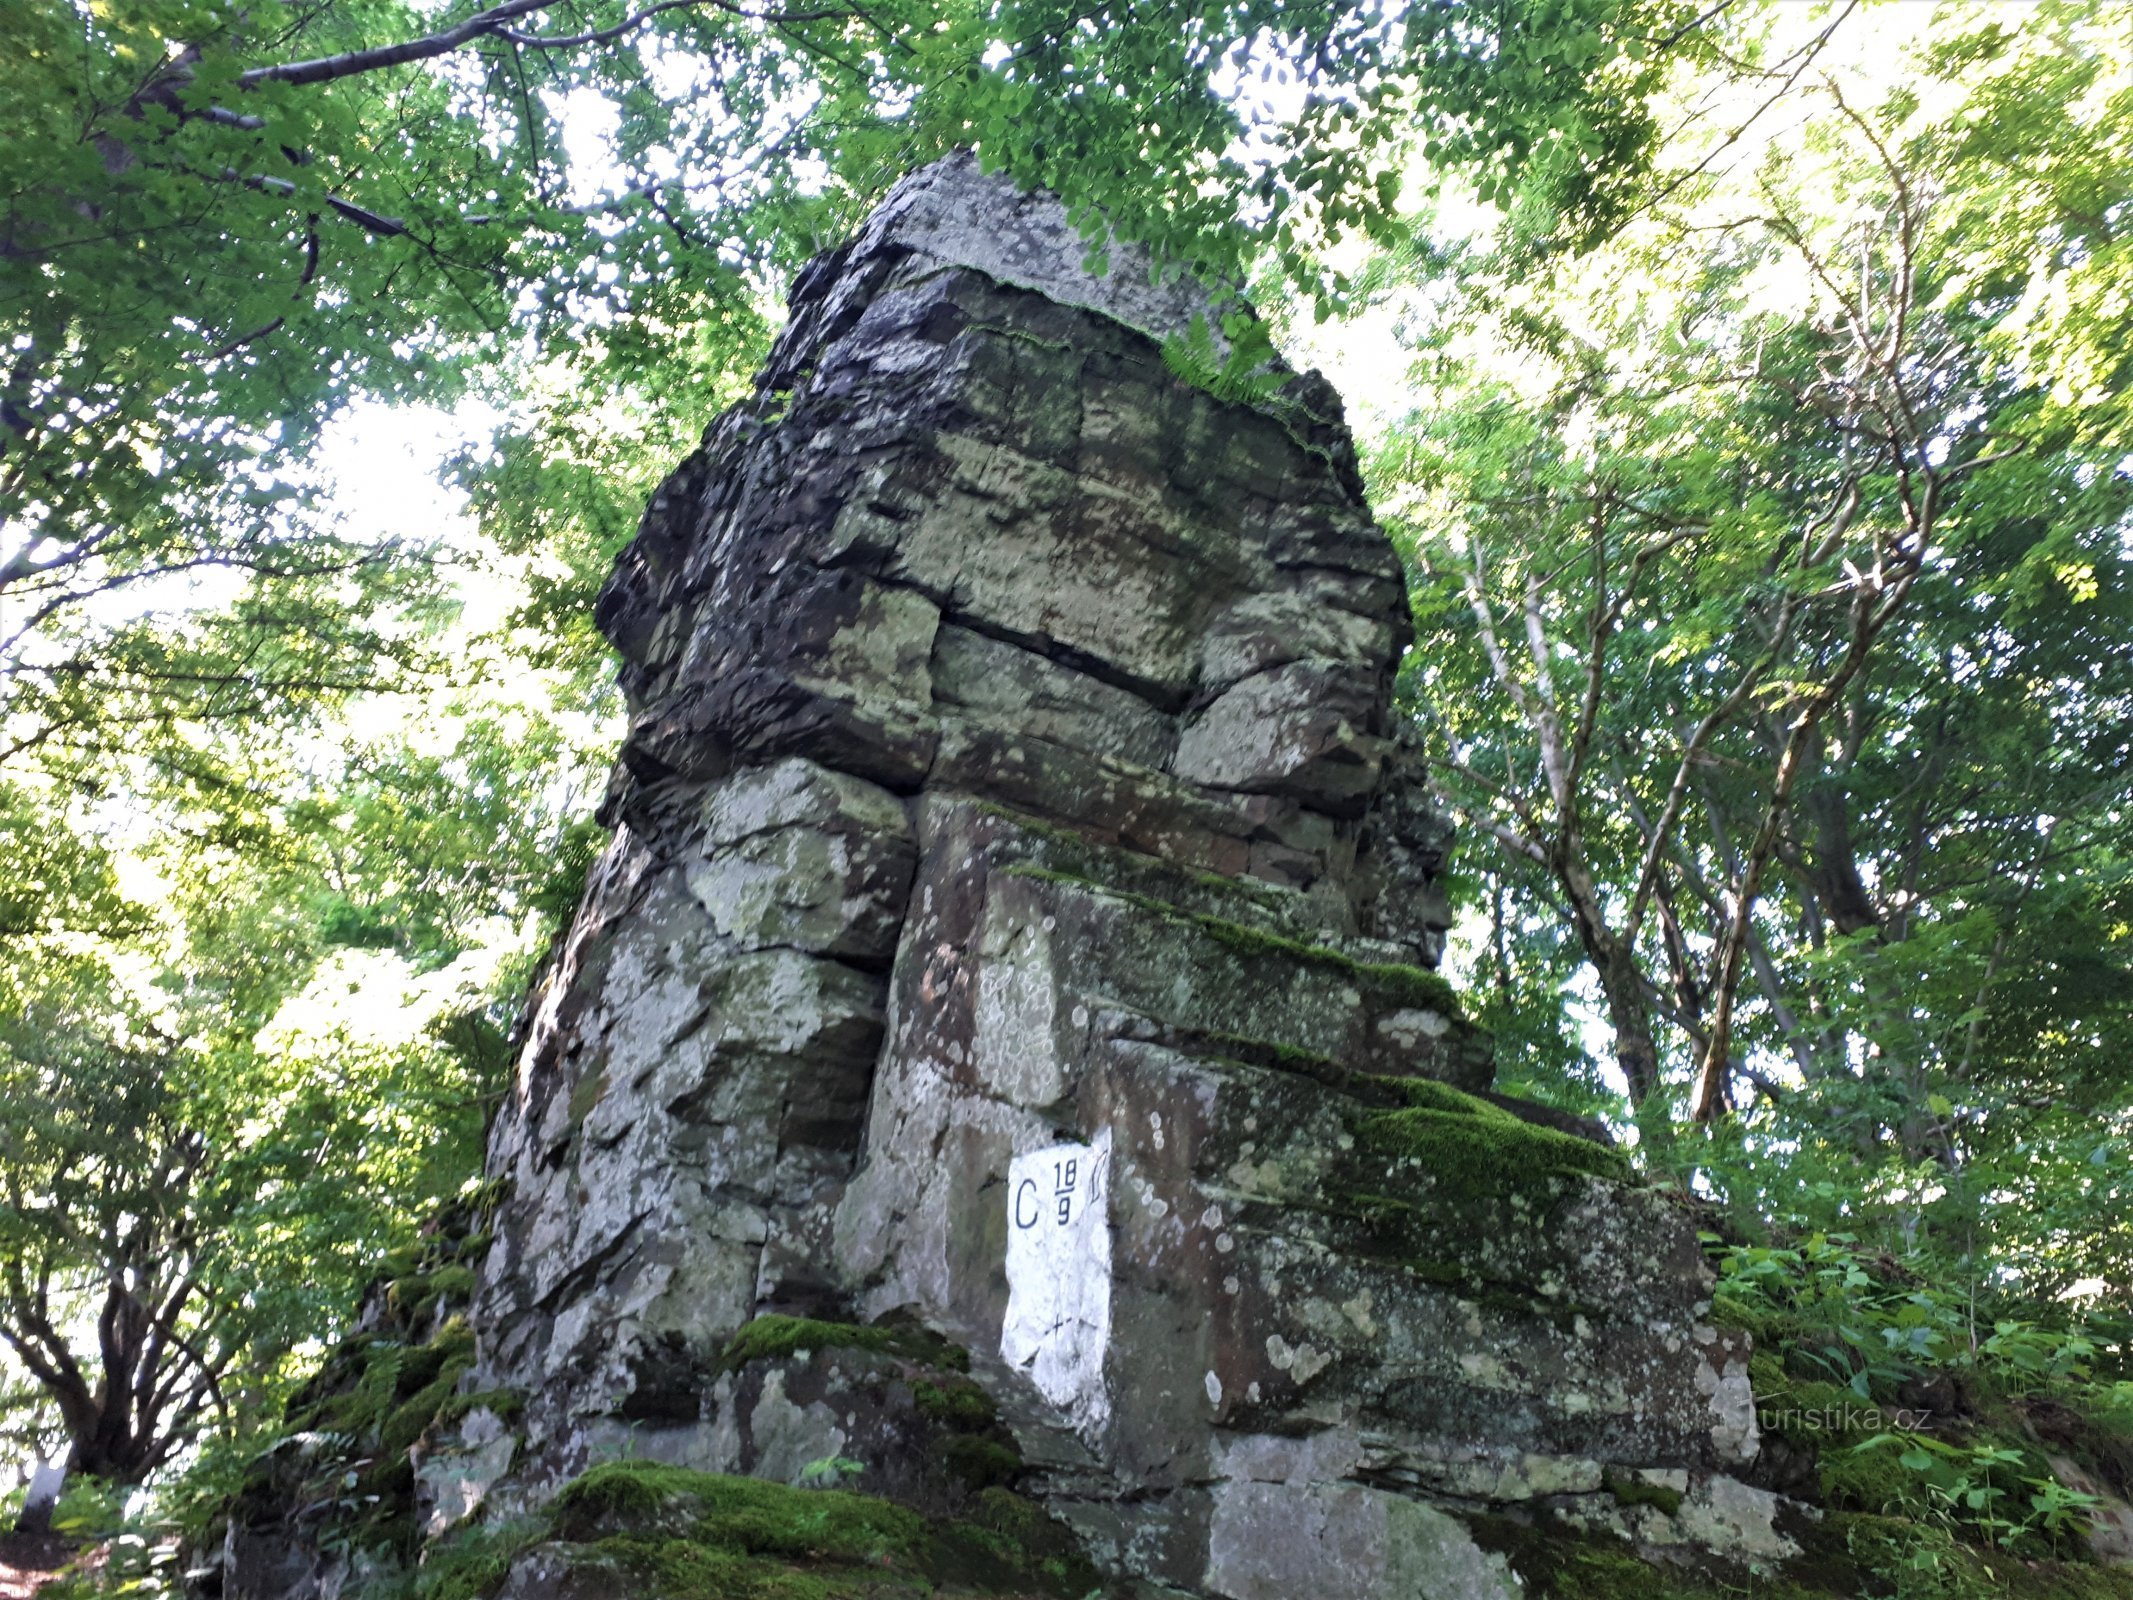 Vista do Janská kamena perto de Krompach